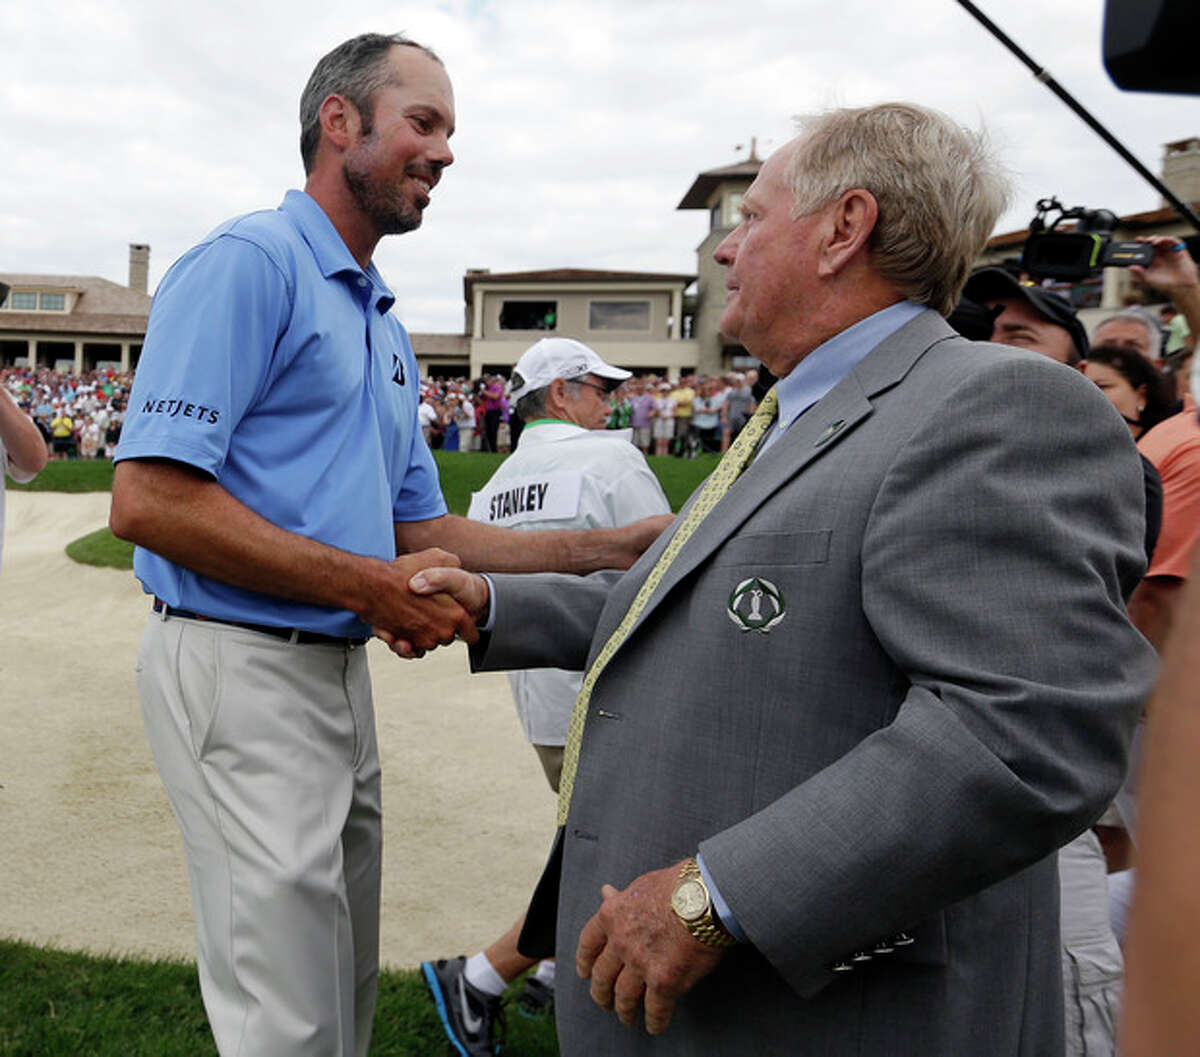 Matt Kuchar, left, is congratulated by Jack Nicklaus after winning the Memorial golf tournament on Sunday, June 2, 2013, in Dublin, Ohio. (AP Photo/Darron Cummings)